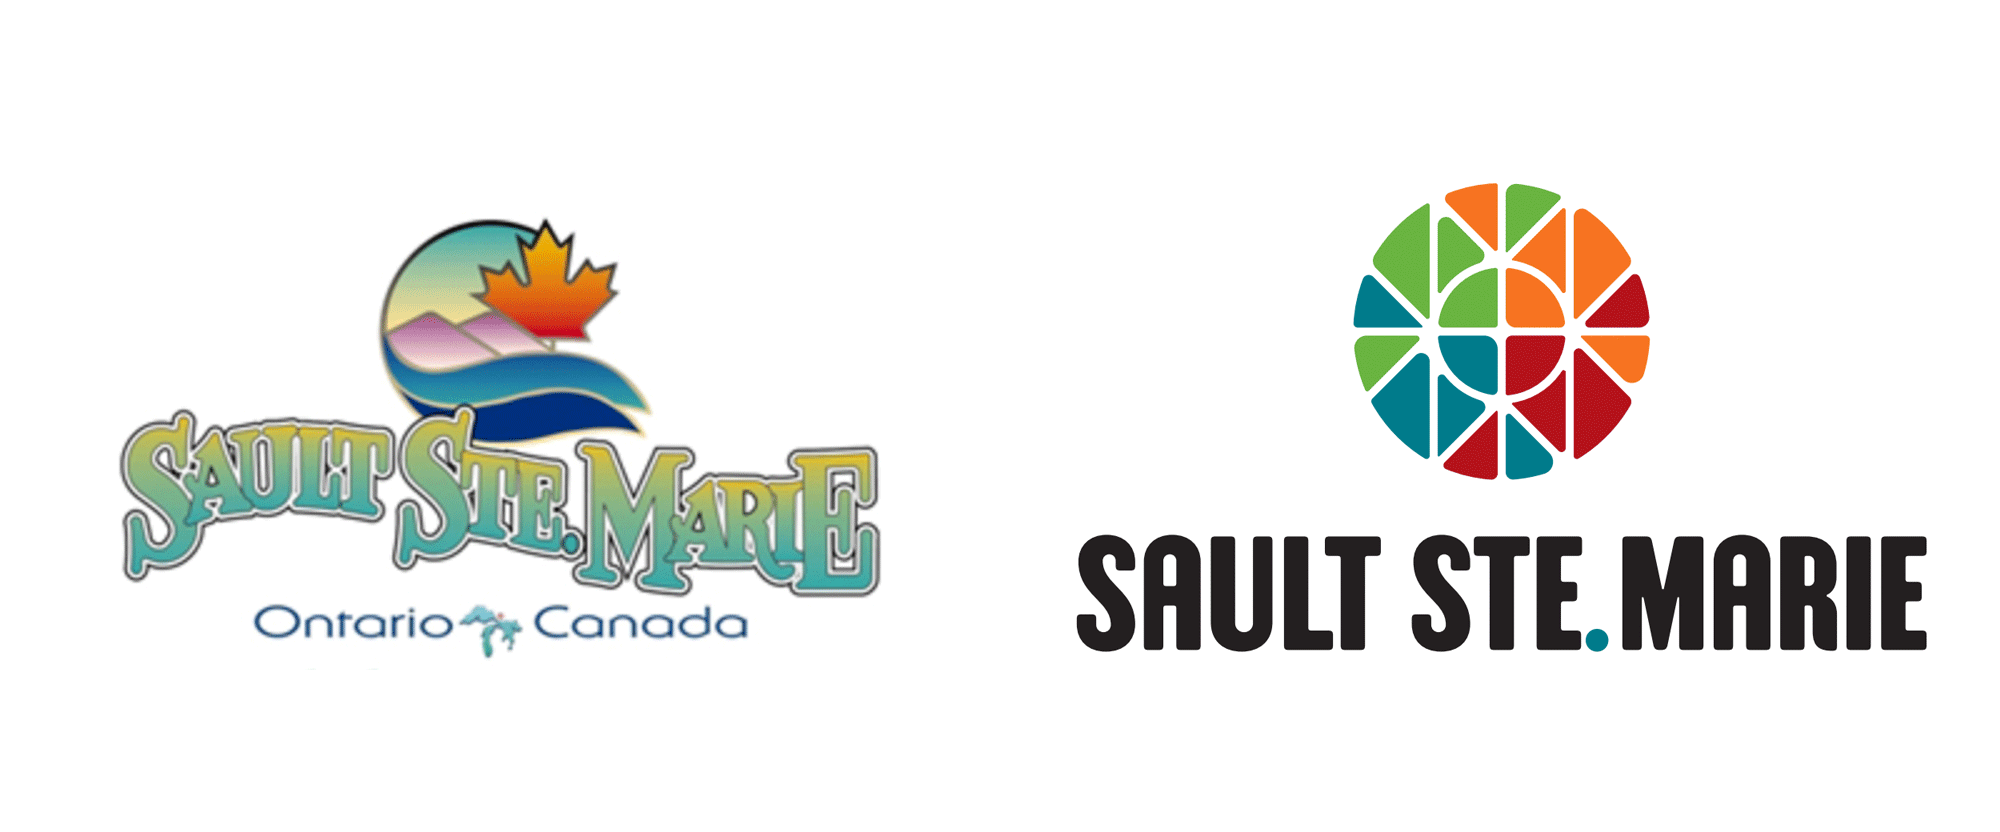 Ste Logo - Brand New: New Logo for Sault Ste. Marie by Scott Thornley + Company